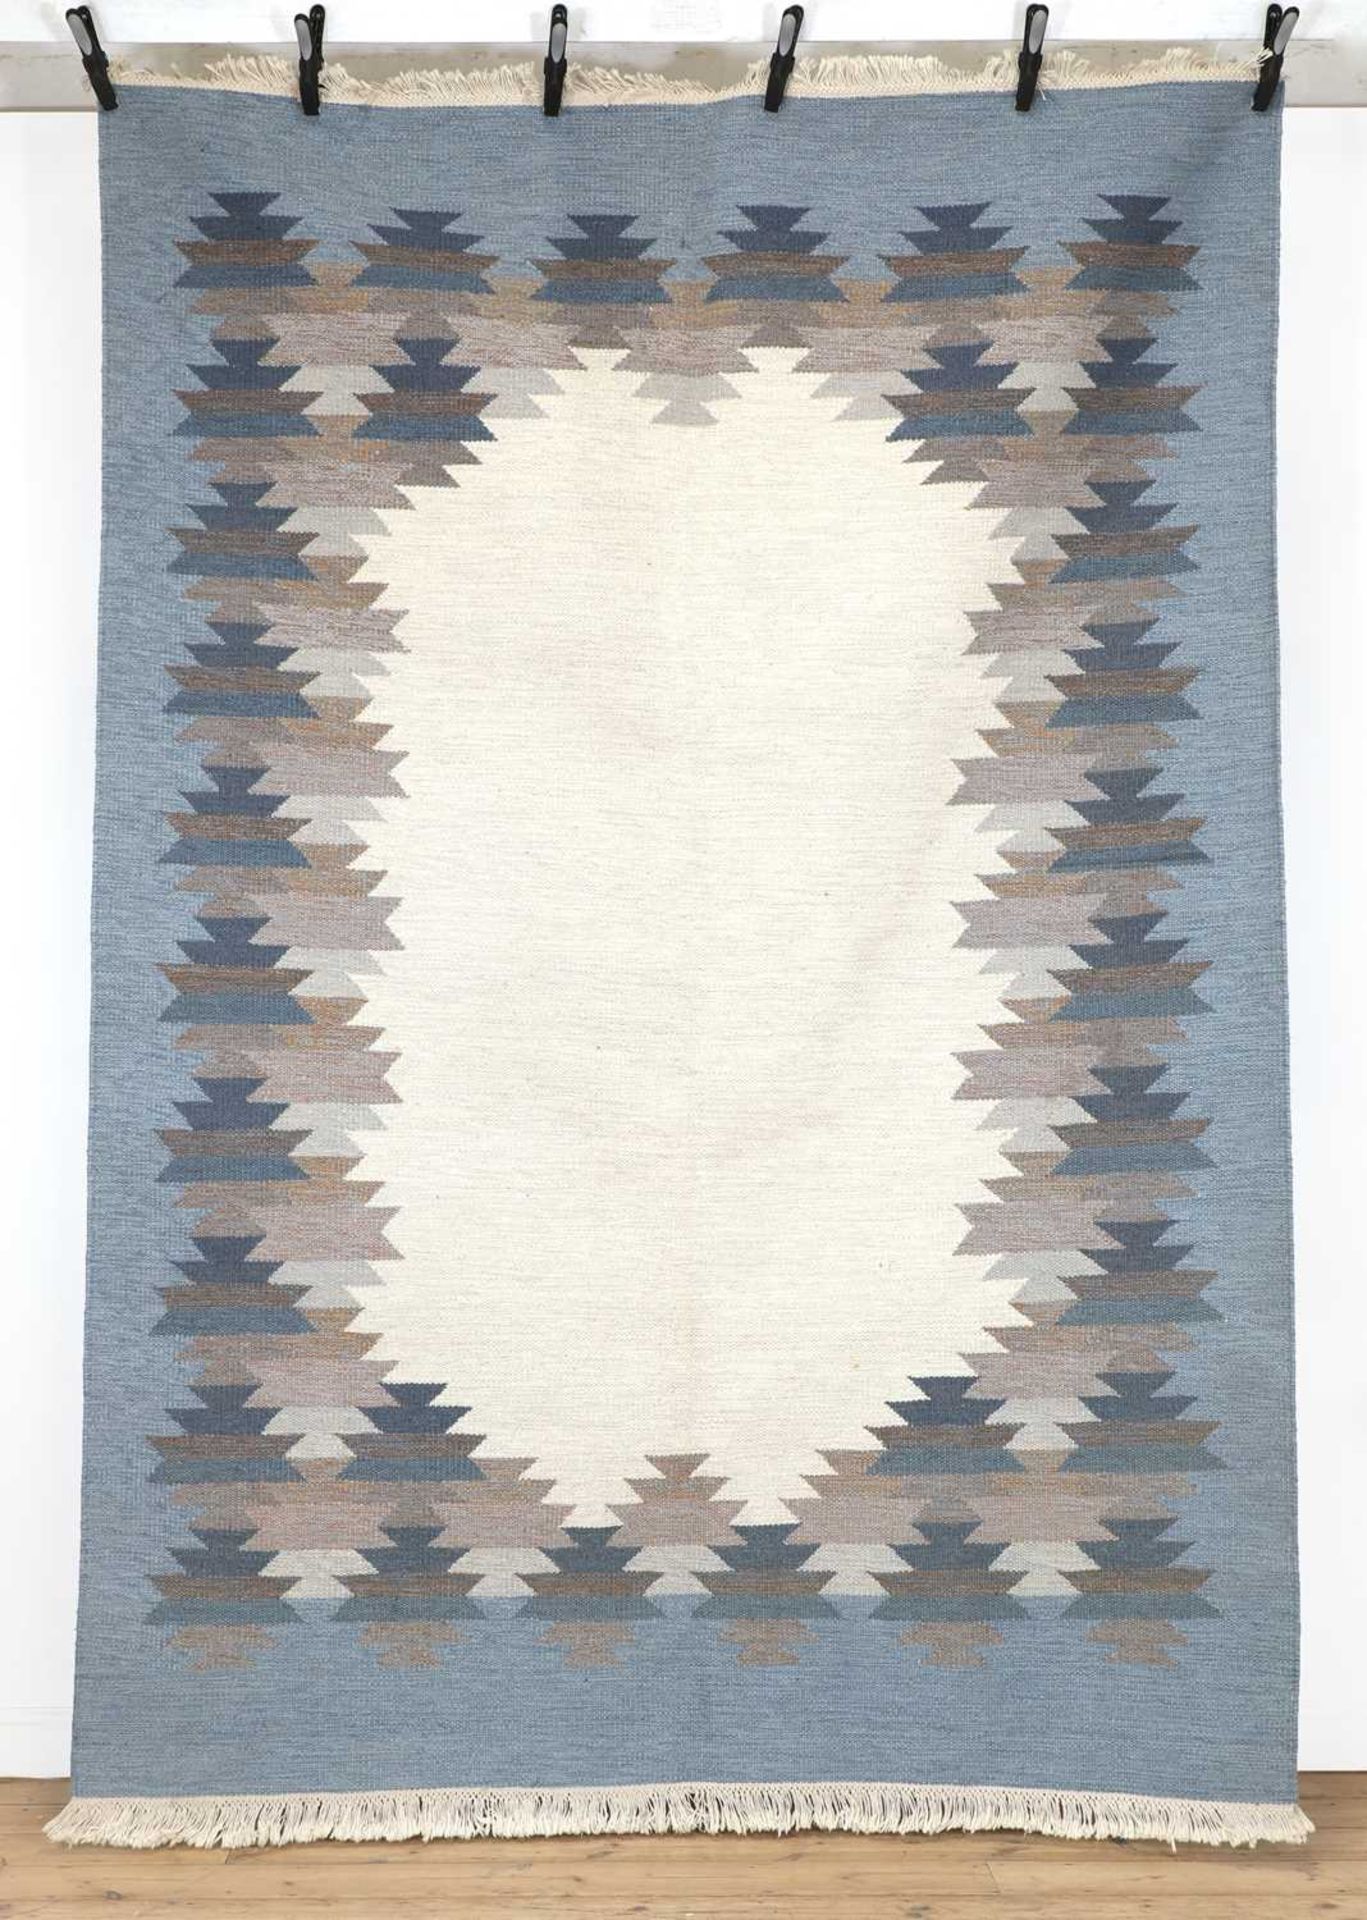 A Swedish röllakan flat-weave kilim rug,